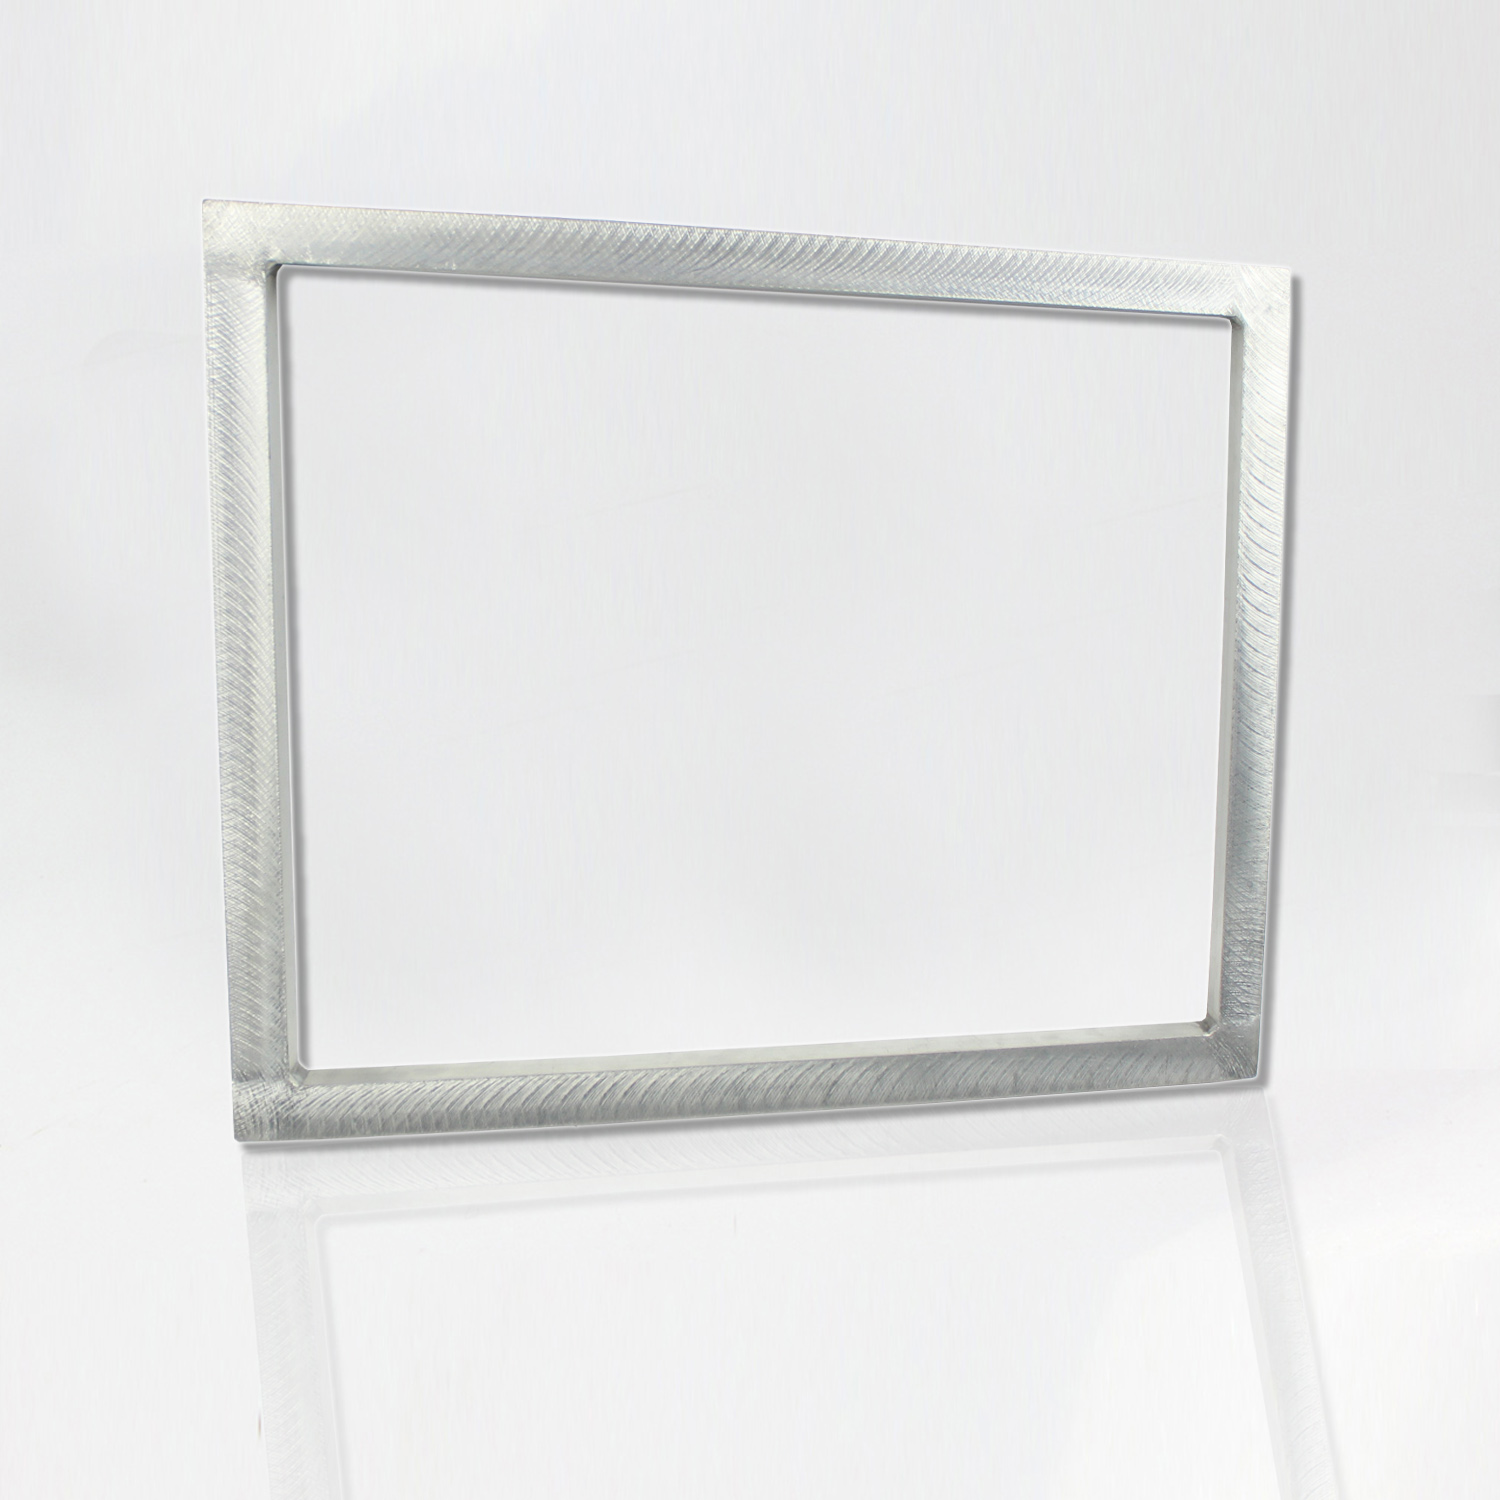 Aluminium Frame 23 "x 31" (pigura mung) Gambar Featured